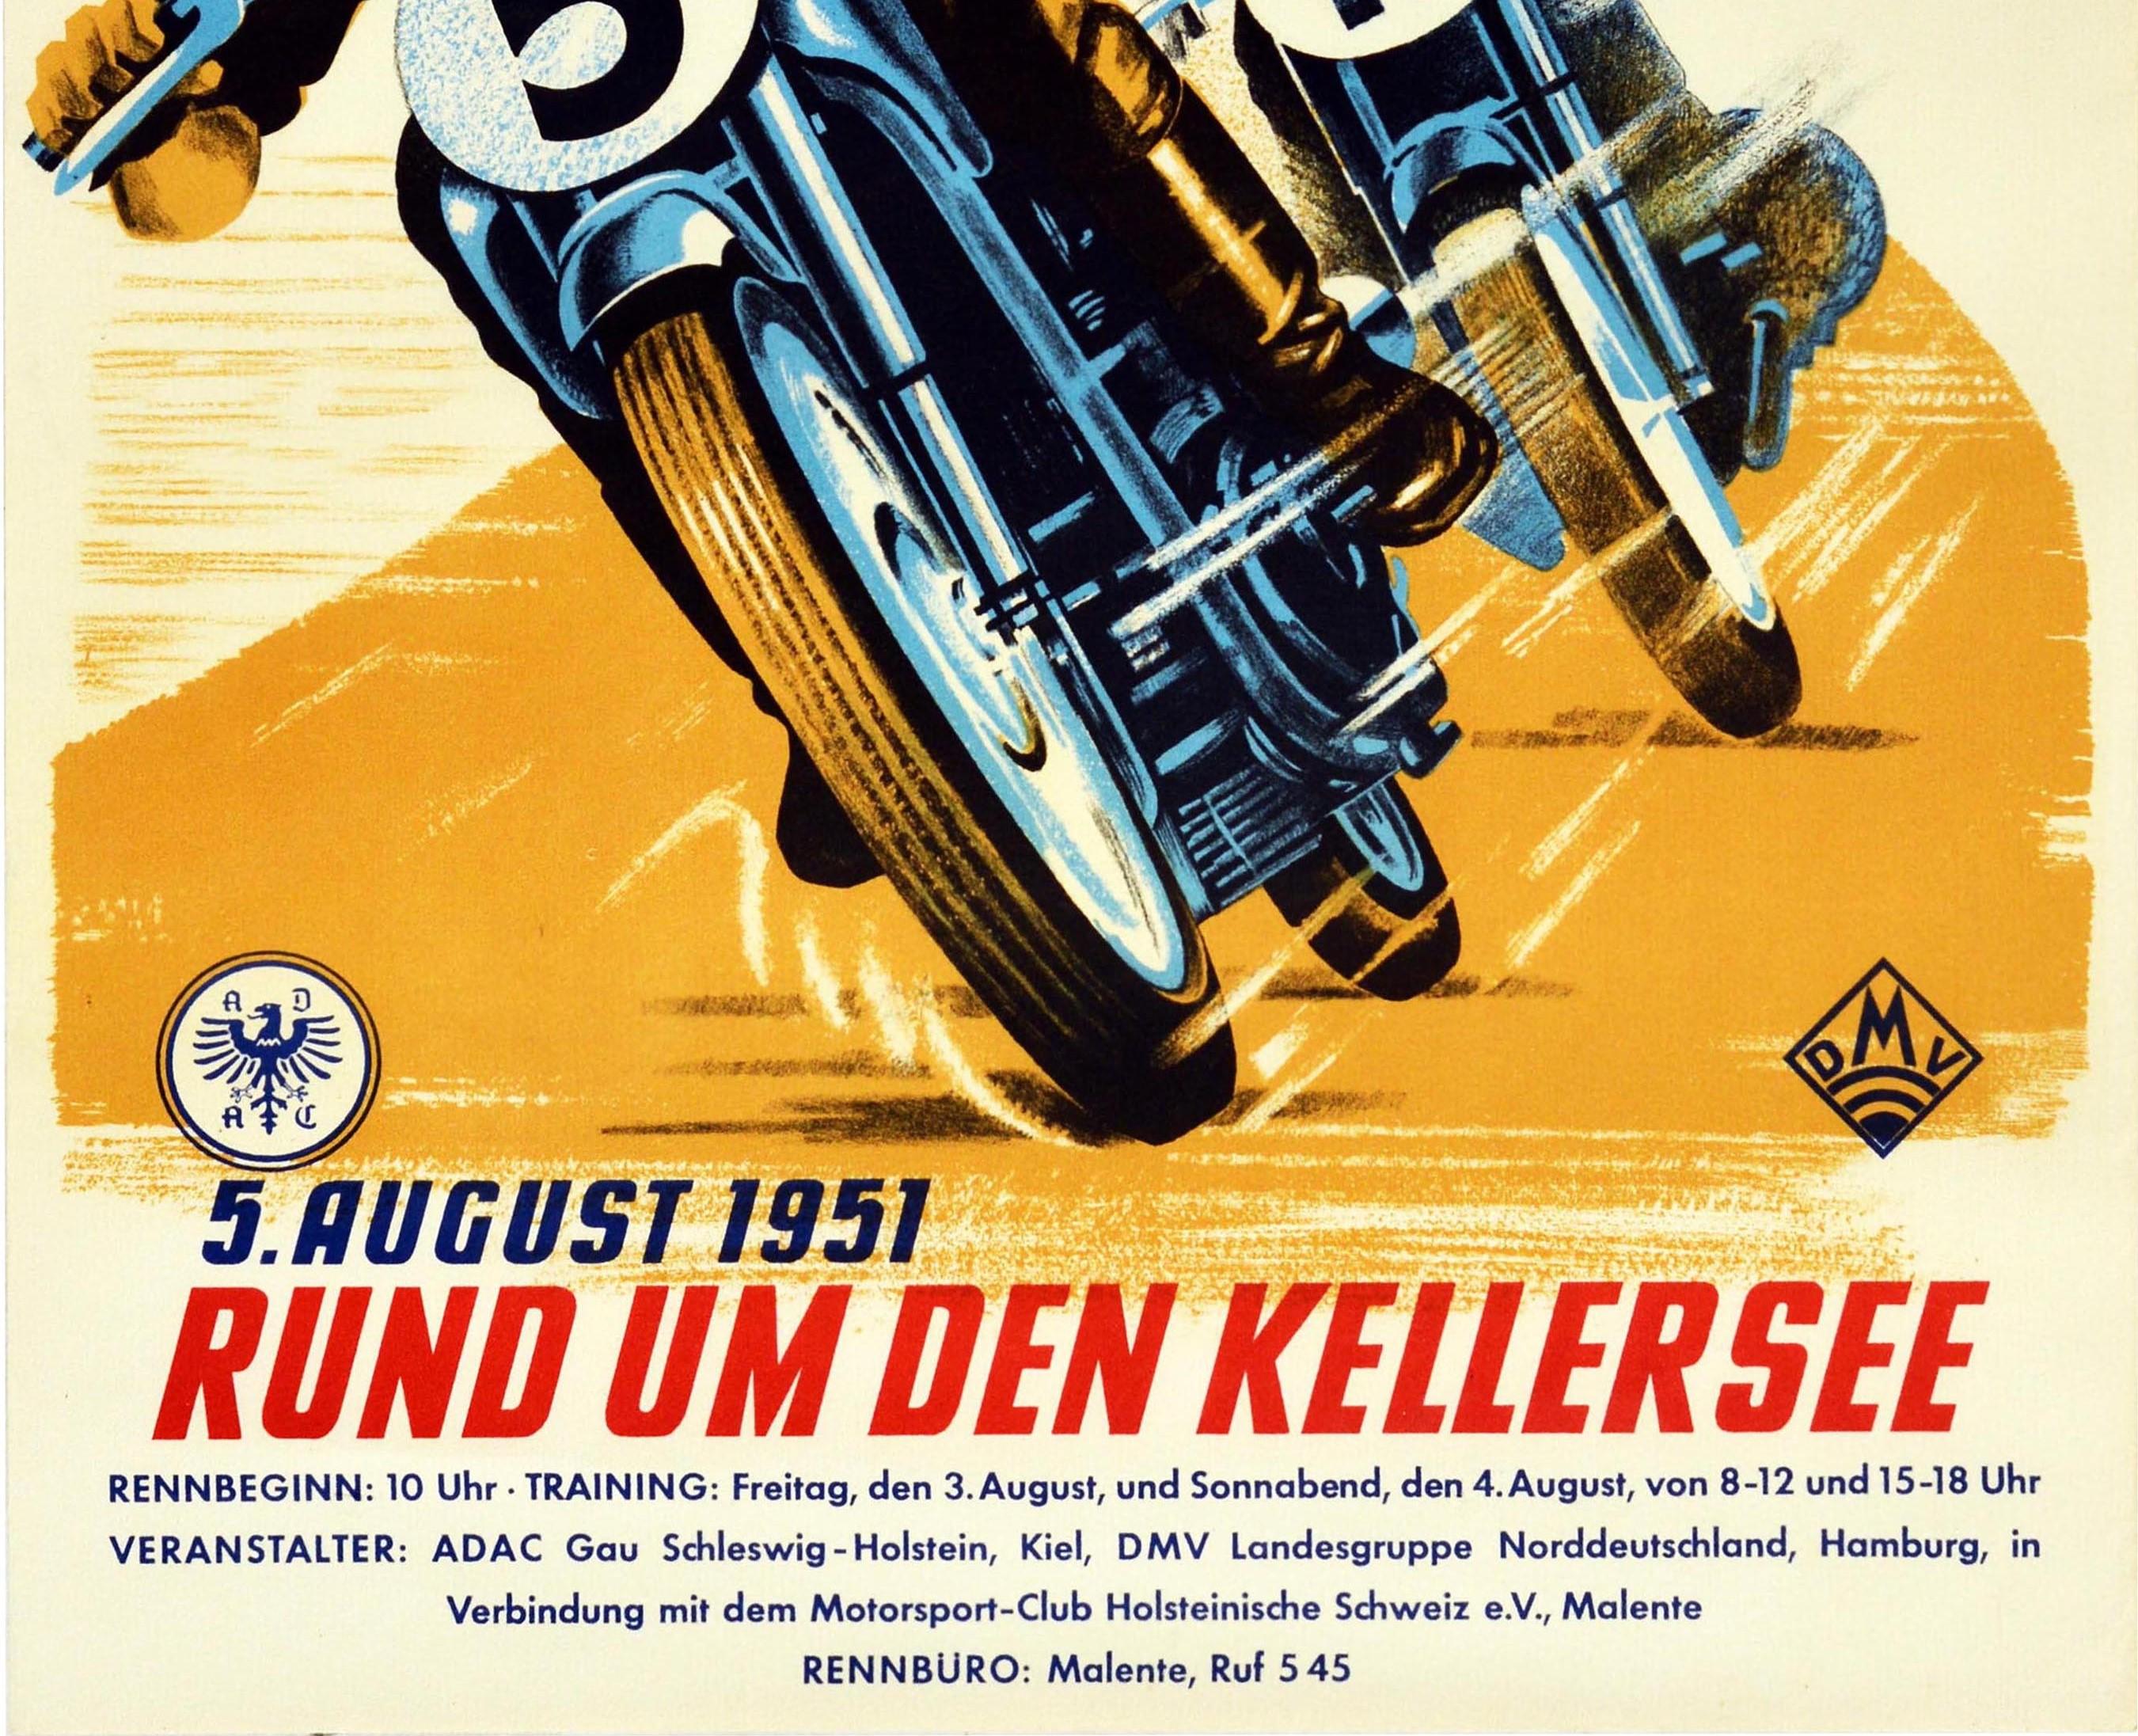 vintage motorcycle race posters